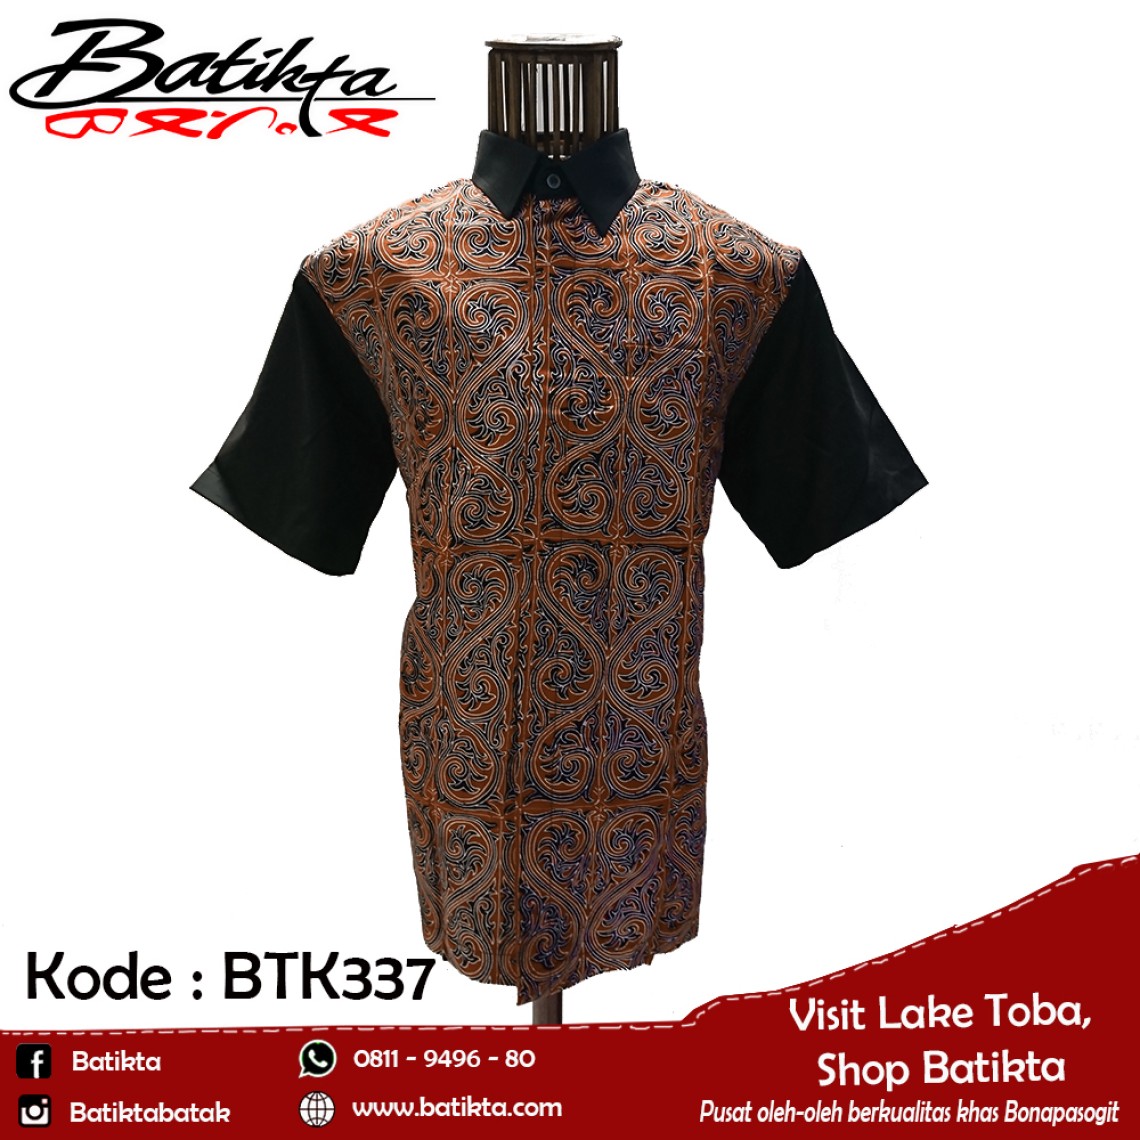 BTK337 HEM Batik Motif Gorga Warna Coklat Putih Hitam profile picture